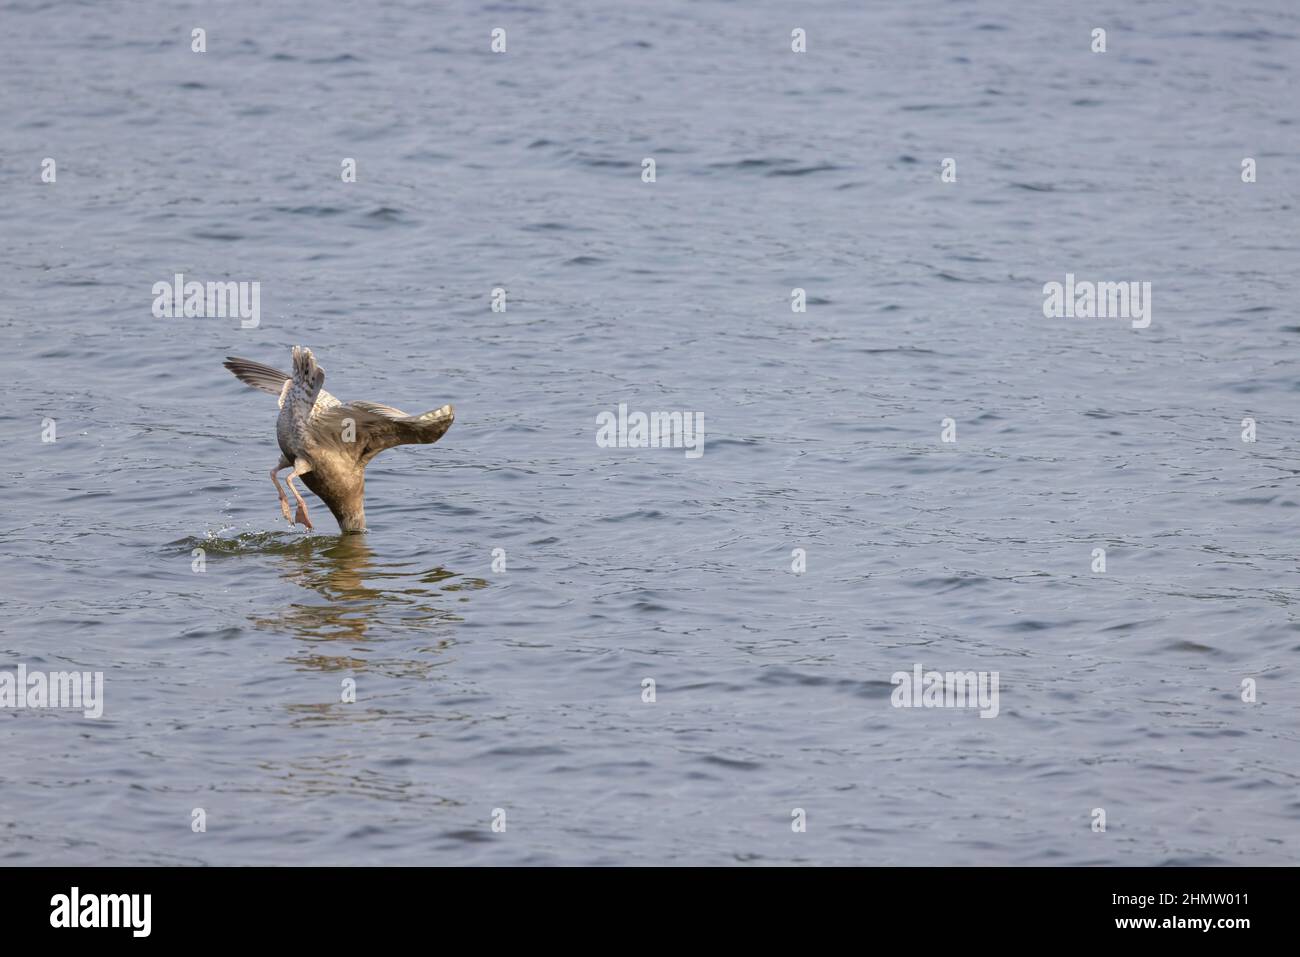 An Olympic gull searching for food in Lake Washington in Seattle, Washington. Stock Photo